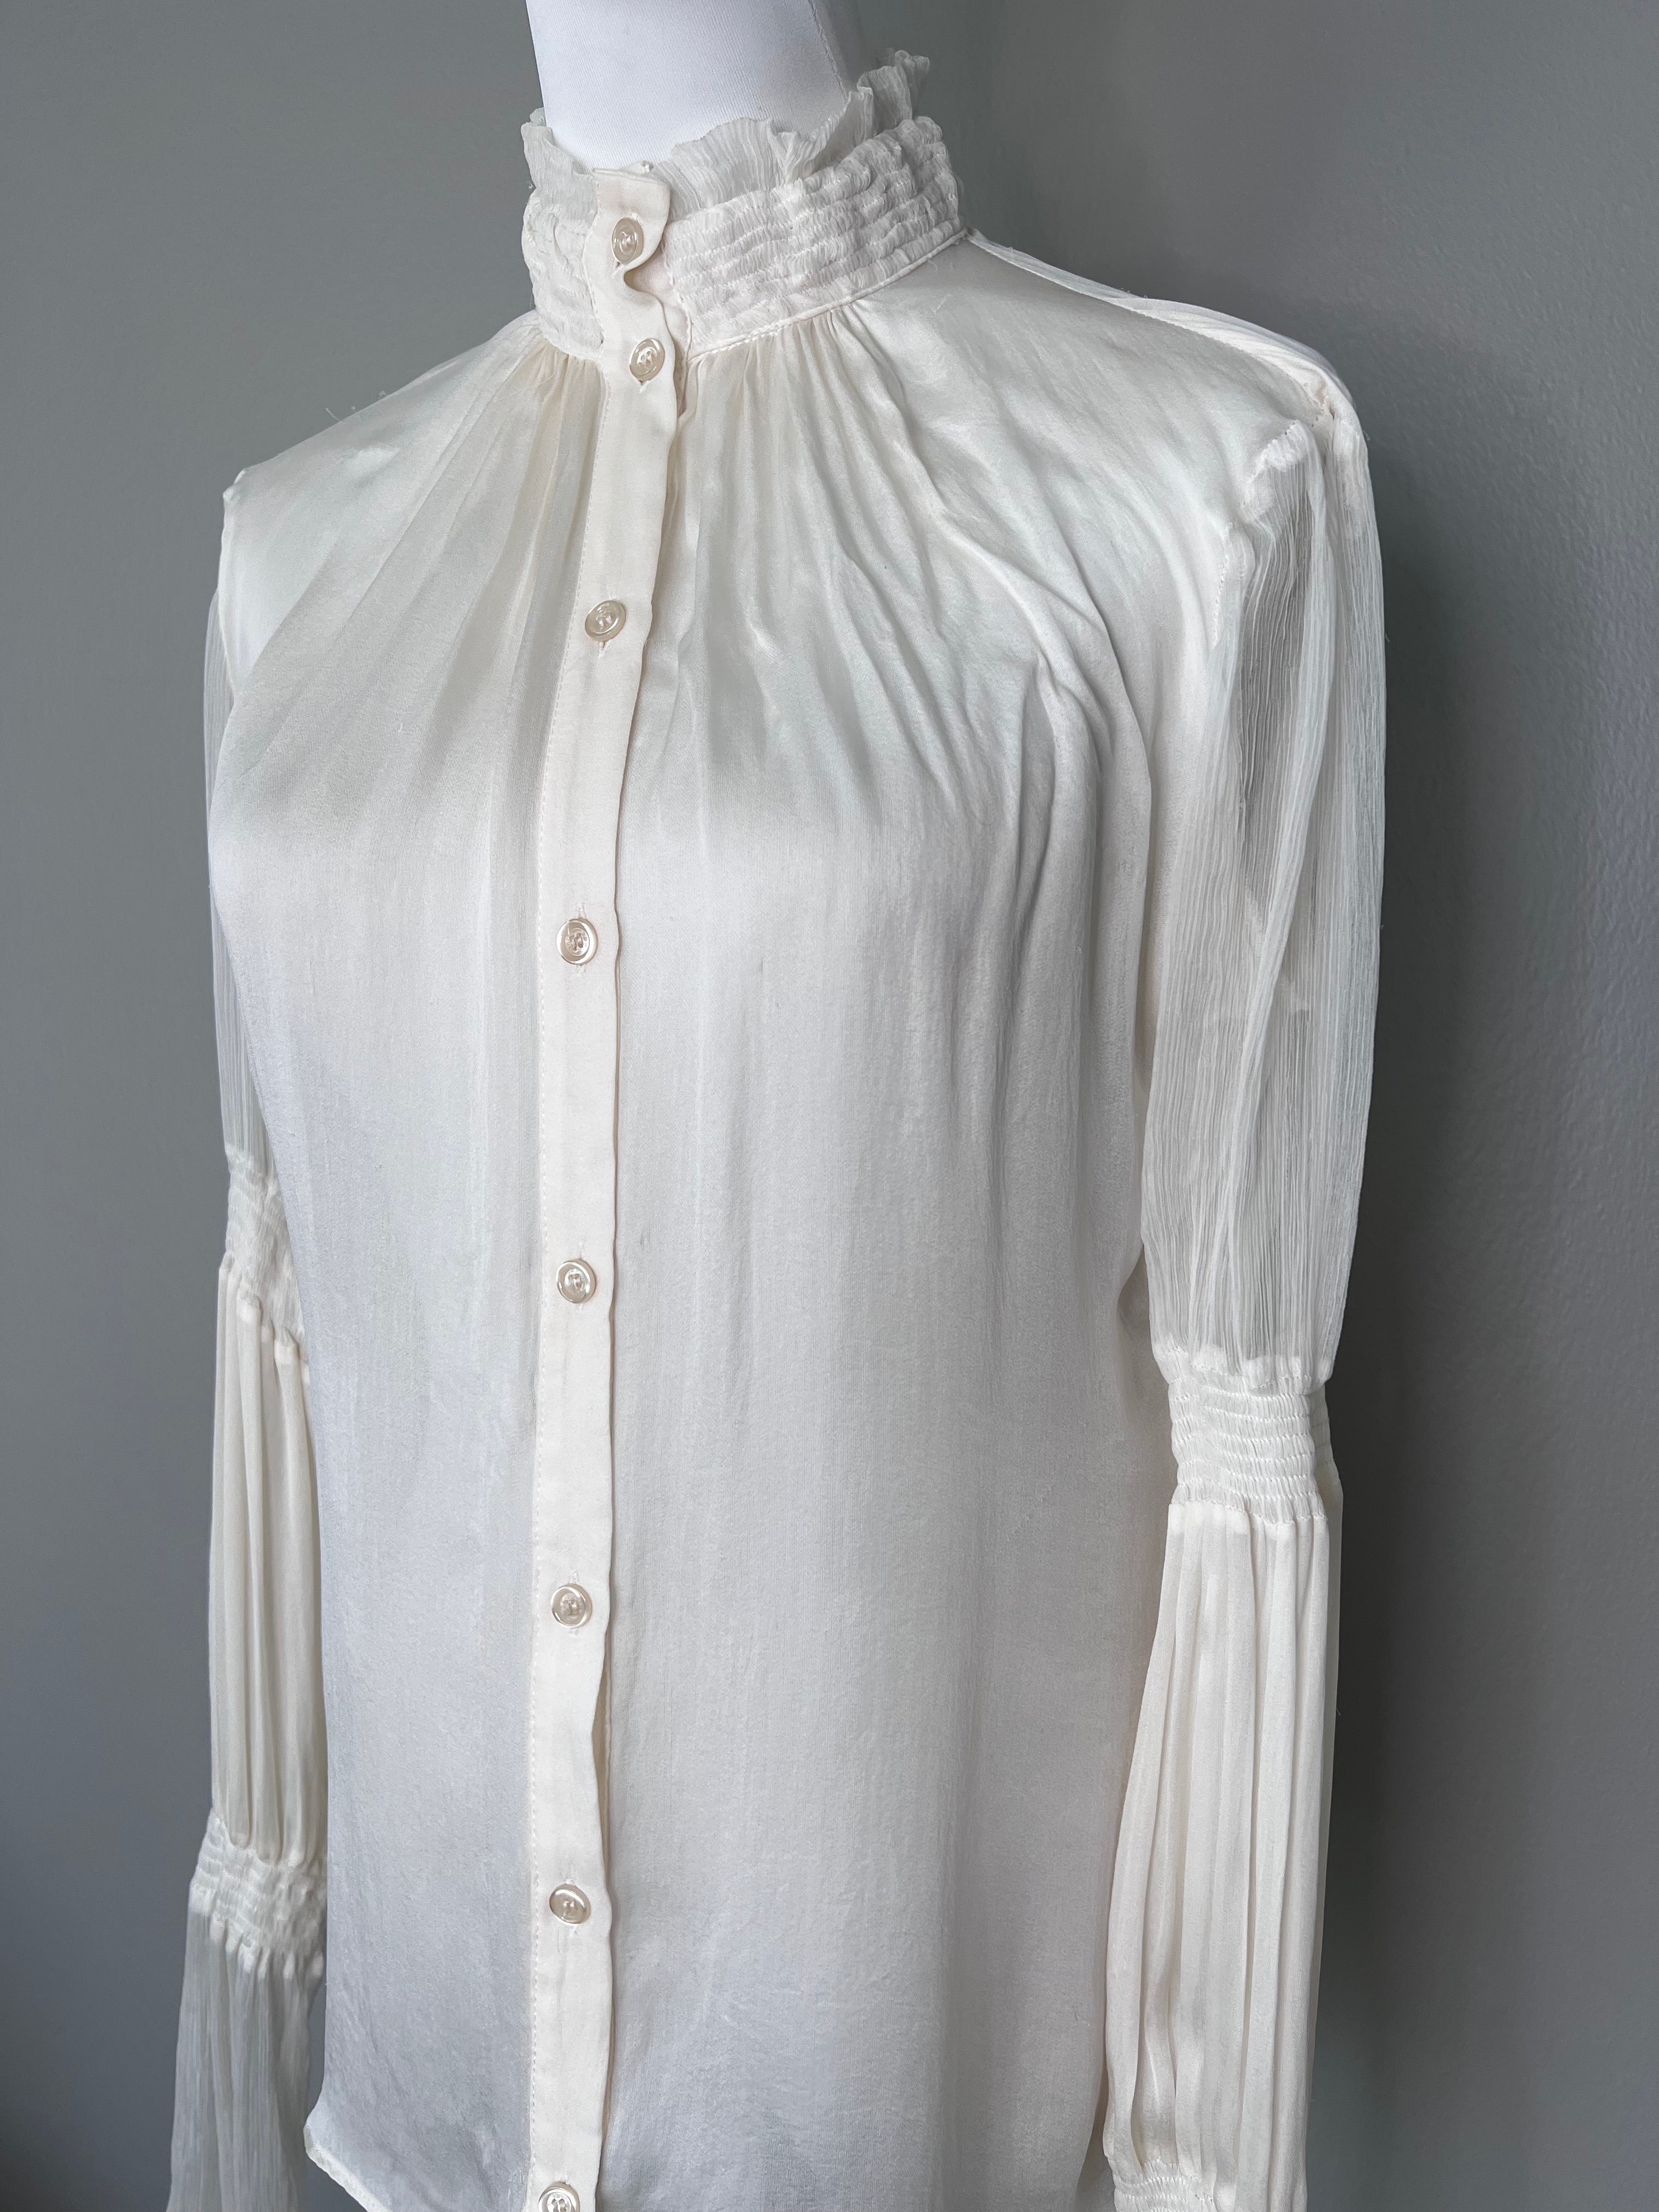 Translucent white shirt - JUSTCAVALLI